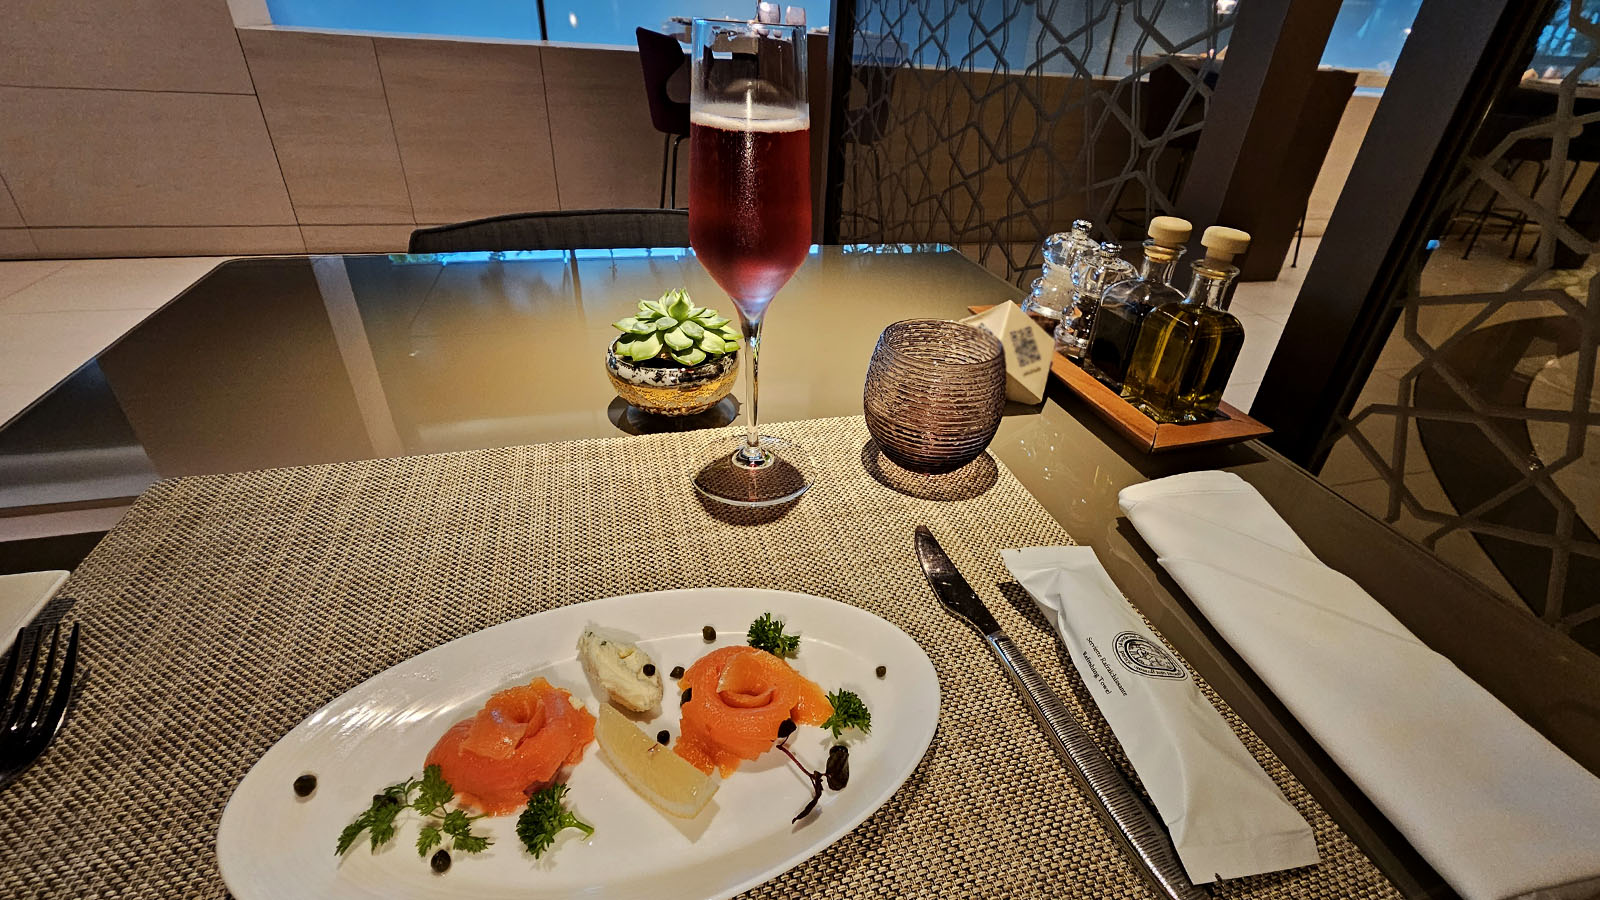 Meal in the Qatar Airways Premium Lounge, Singapore